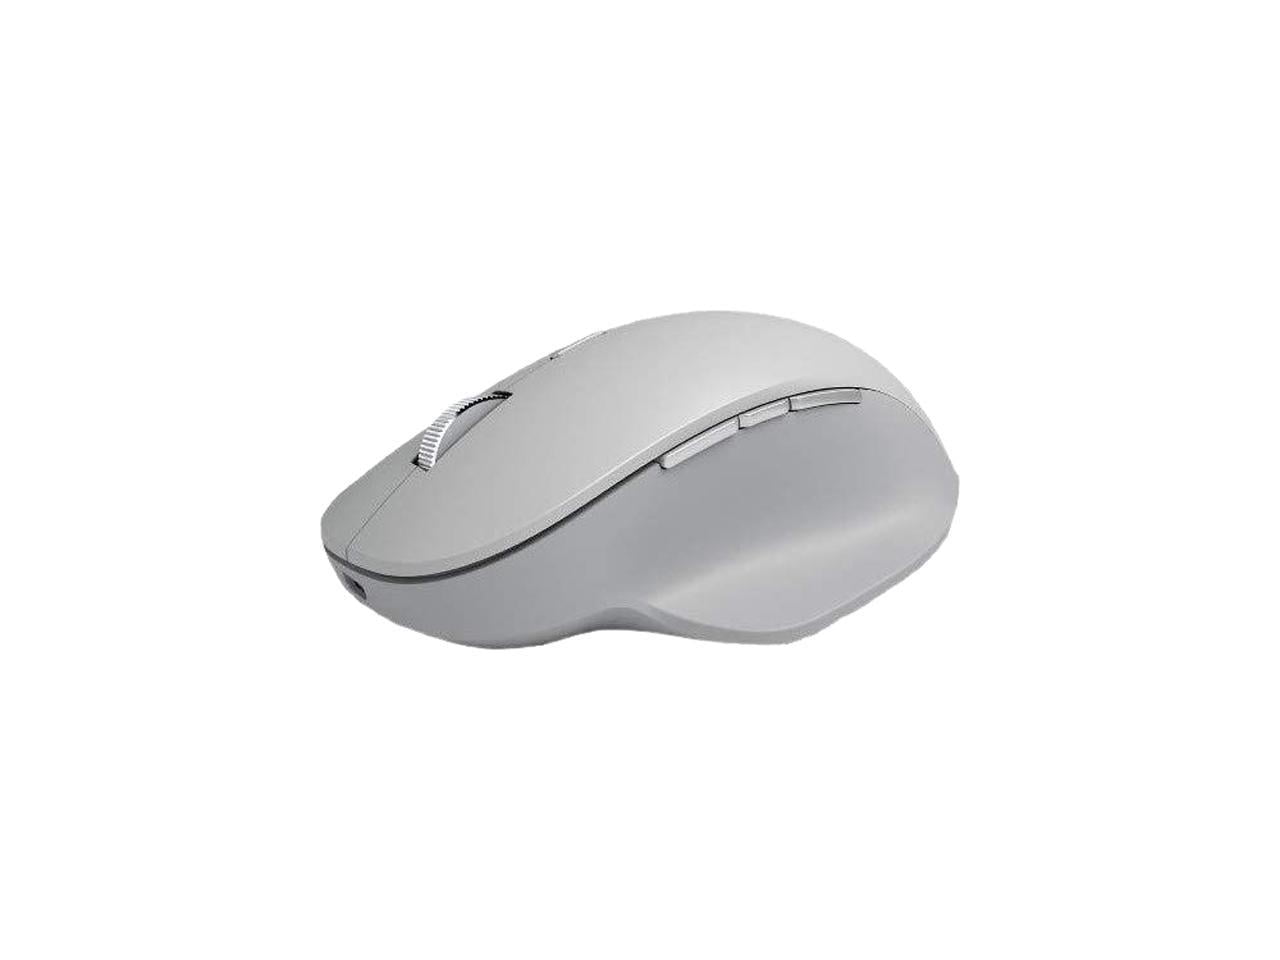 Precision Bluetooth Surface - 4.0 Gray Microsoft Mouse,